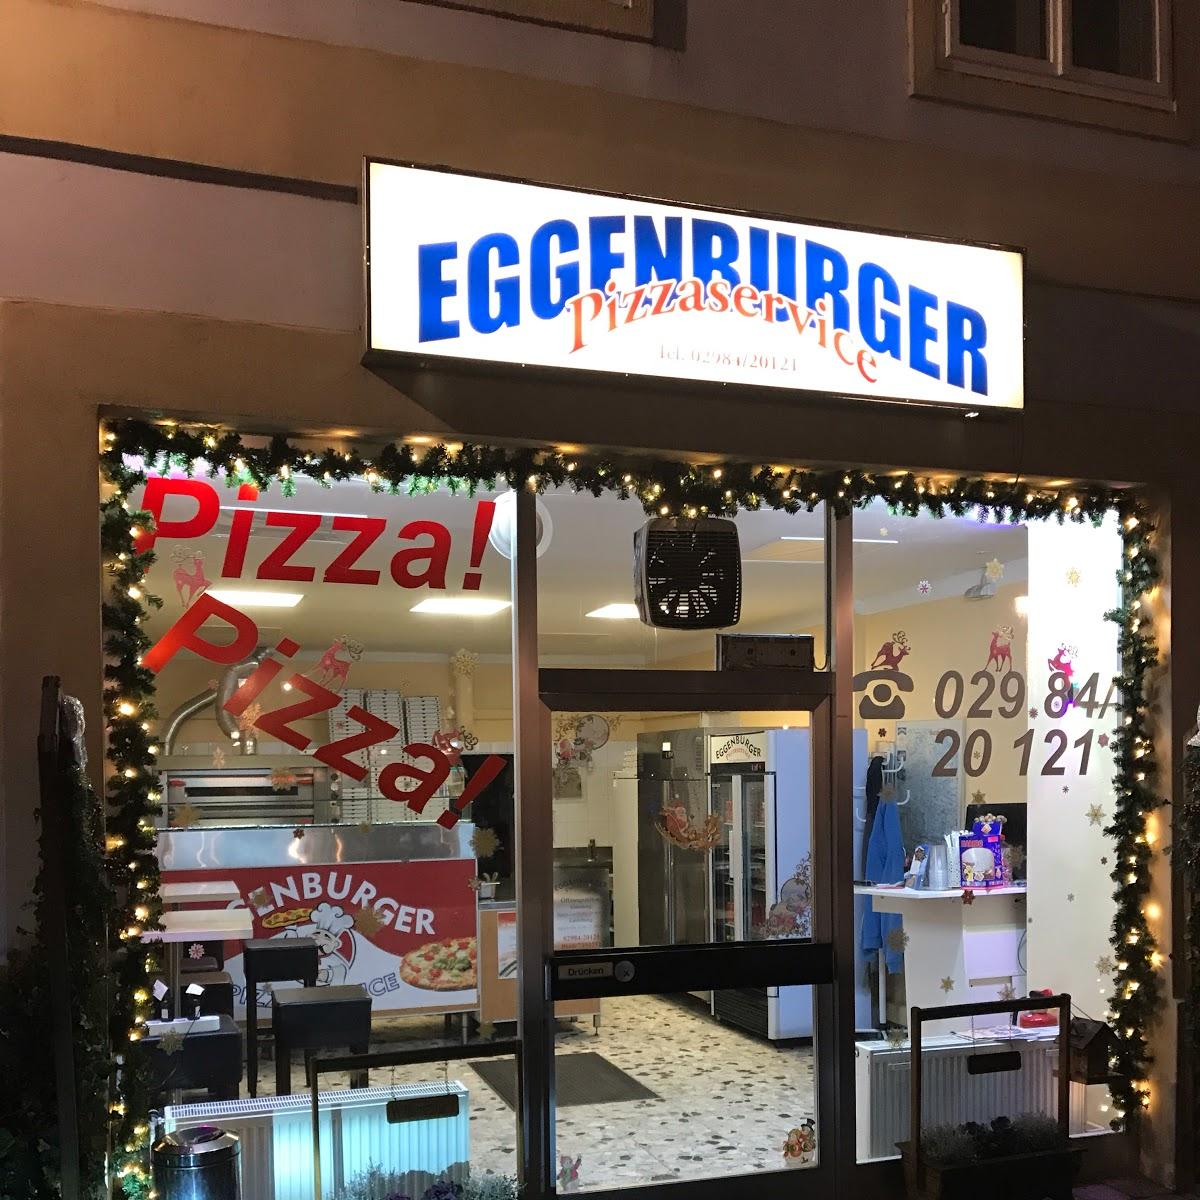 Restaurant "er Pizzaservice" in Eggenburg